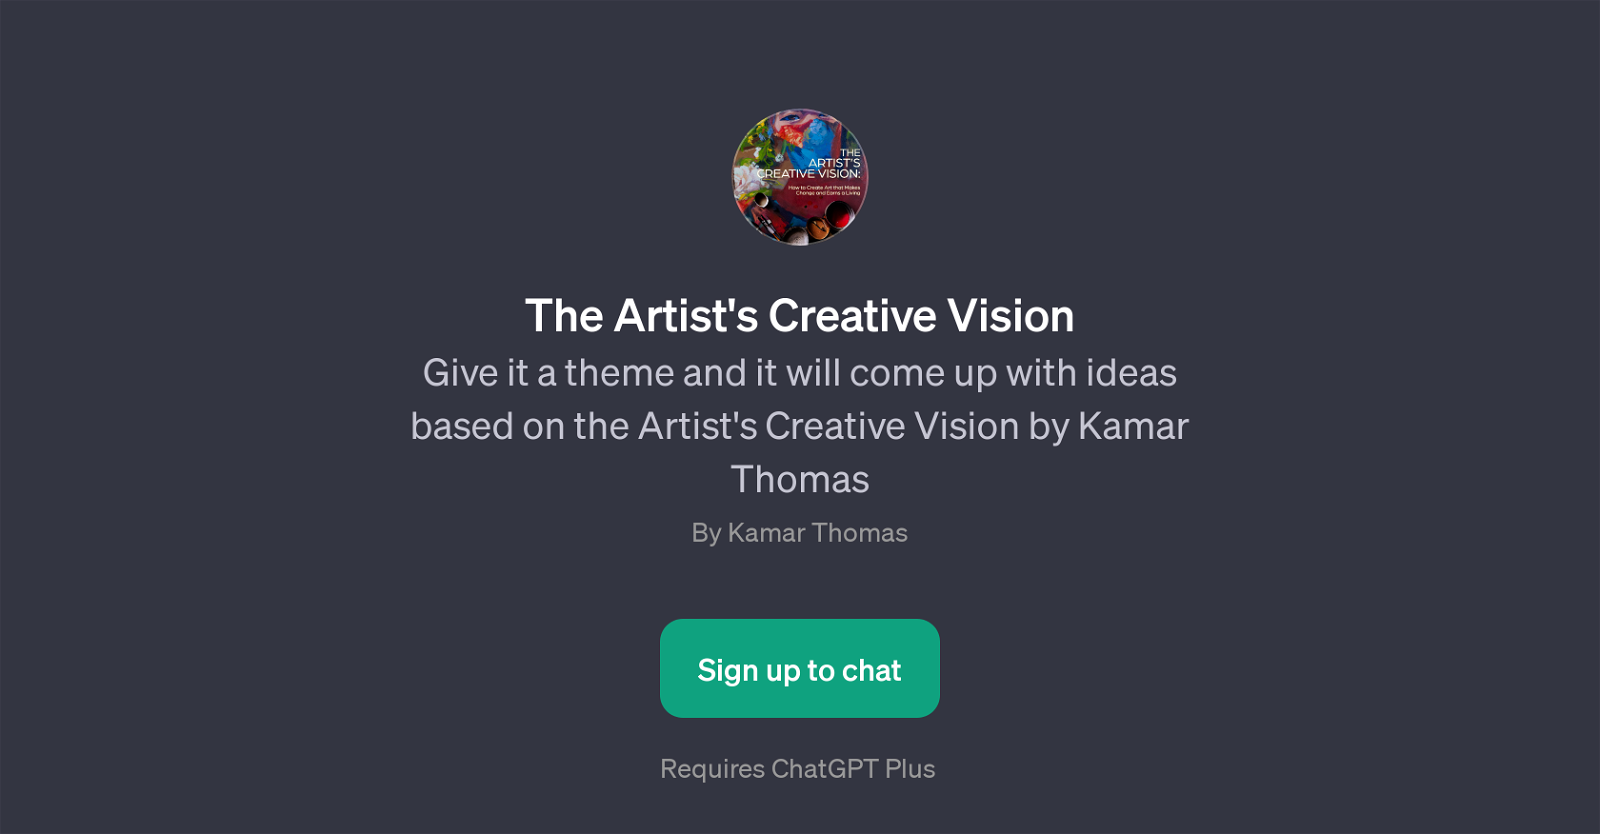 The Artist's Creative Vision website